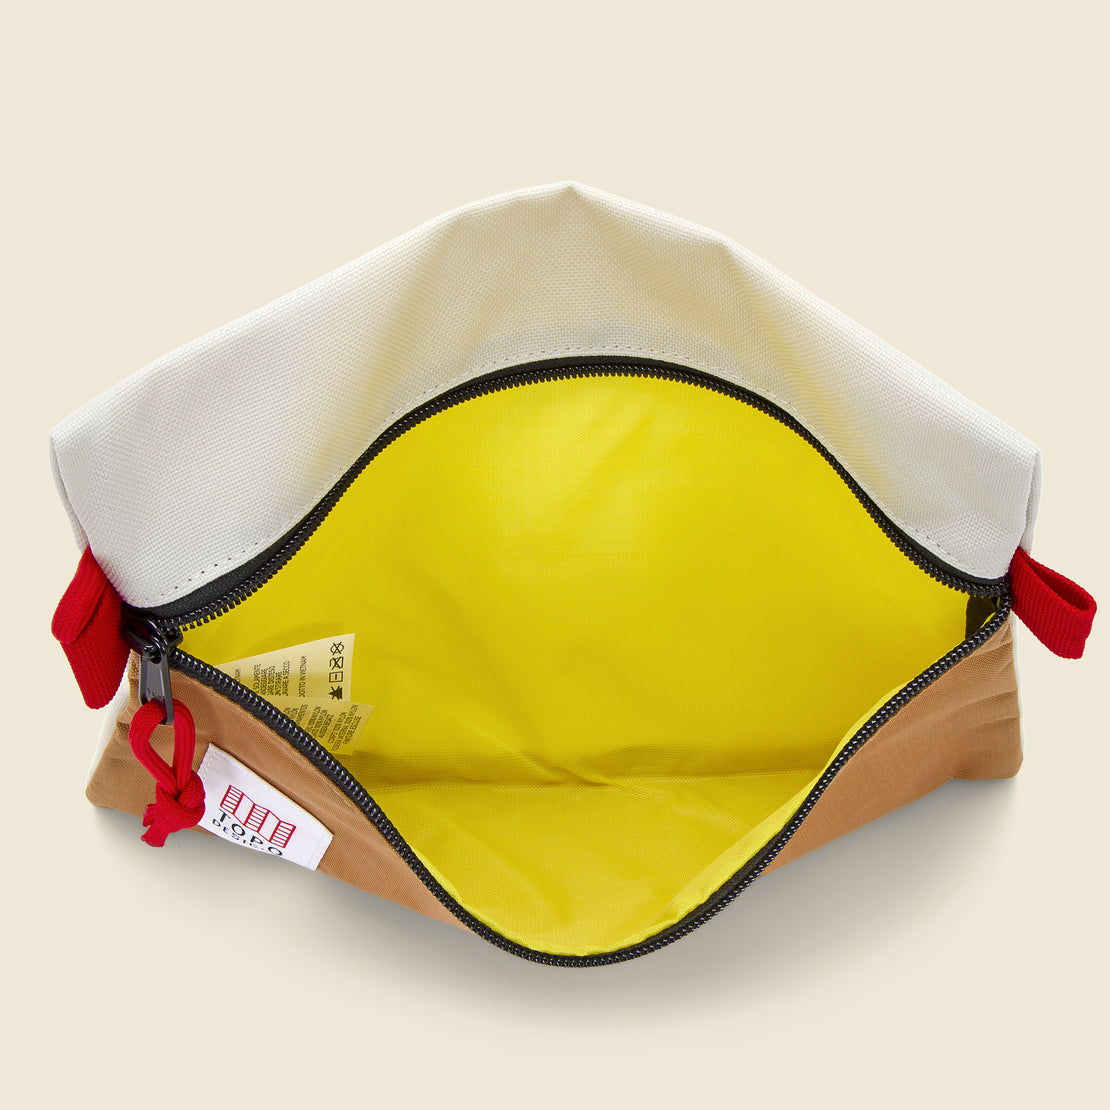 Medium Accessory Bag - Bone White/Khaki - Topo Designs - STAG Provisions - Accessories - Bags / Luggage